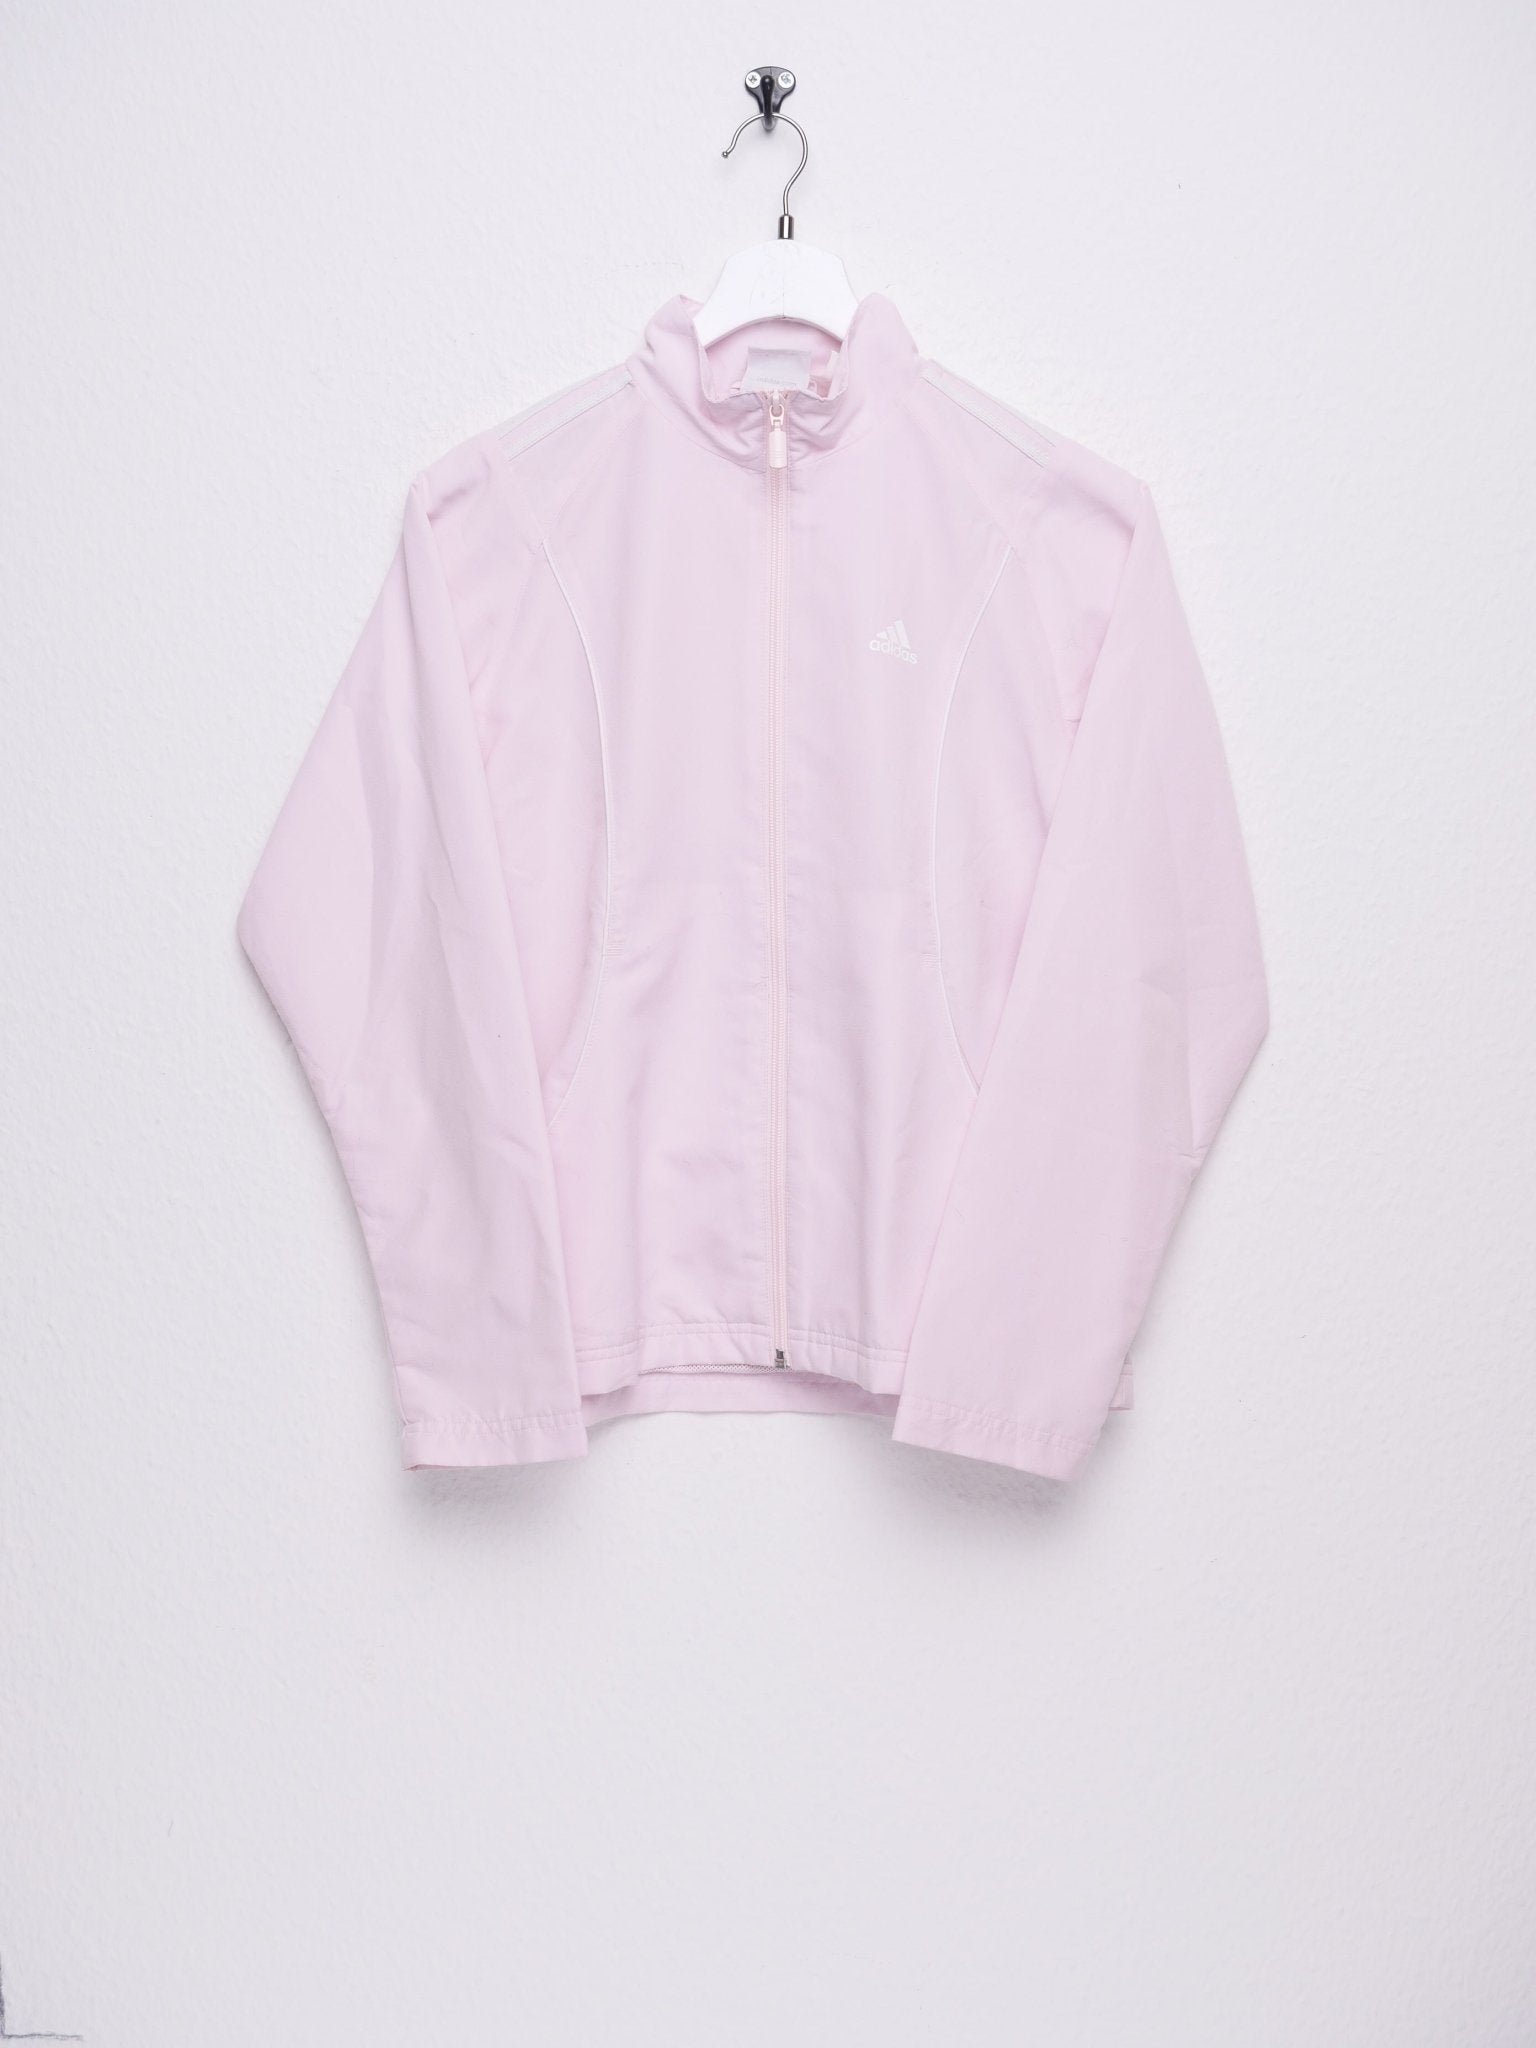 Adidas printed Logo pink Track Jacket - Peeces